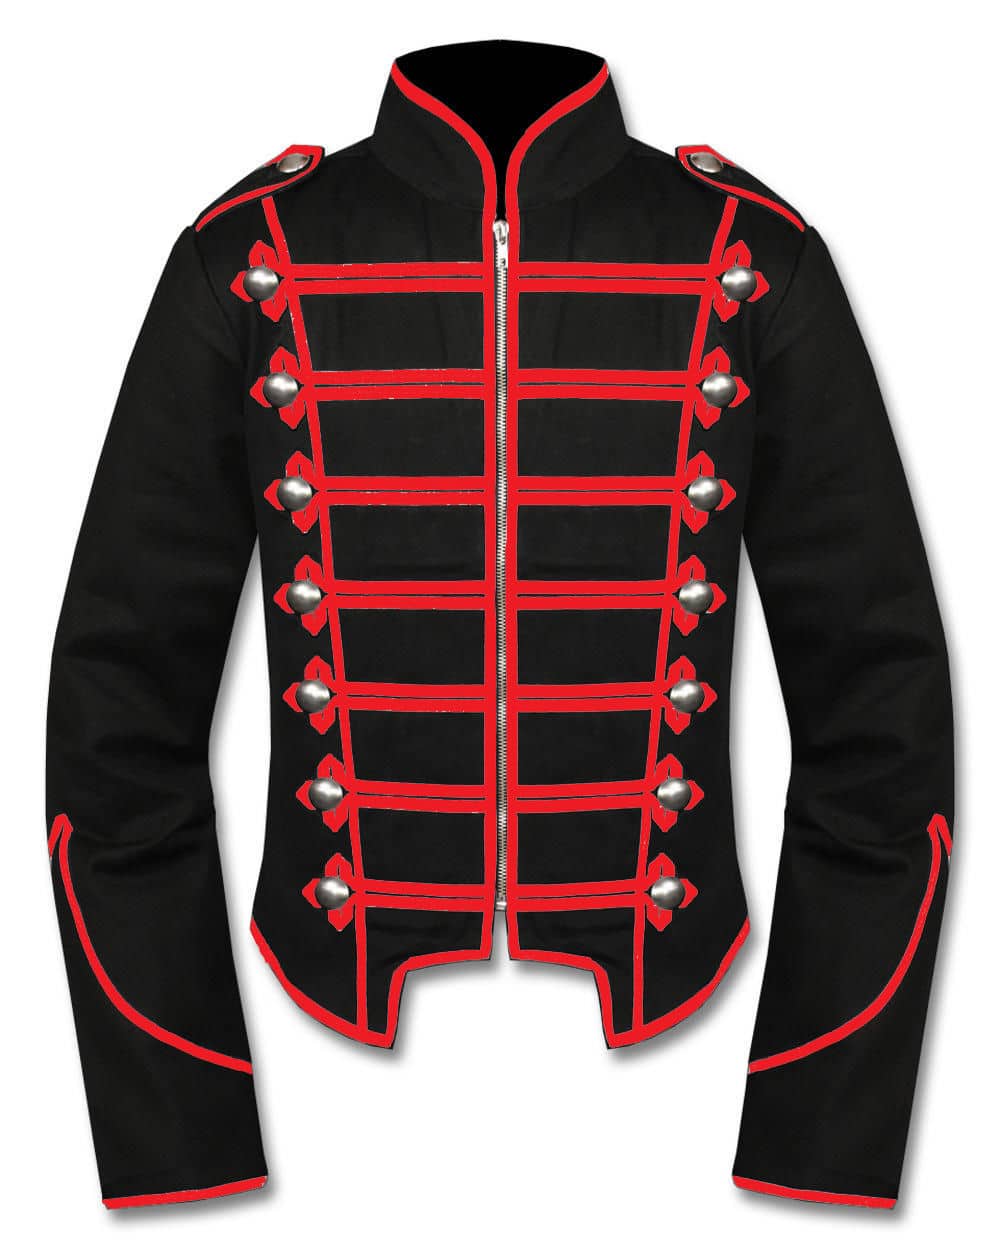 Buy Drummer Doublet Red Military Jacket For Active Men